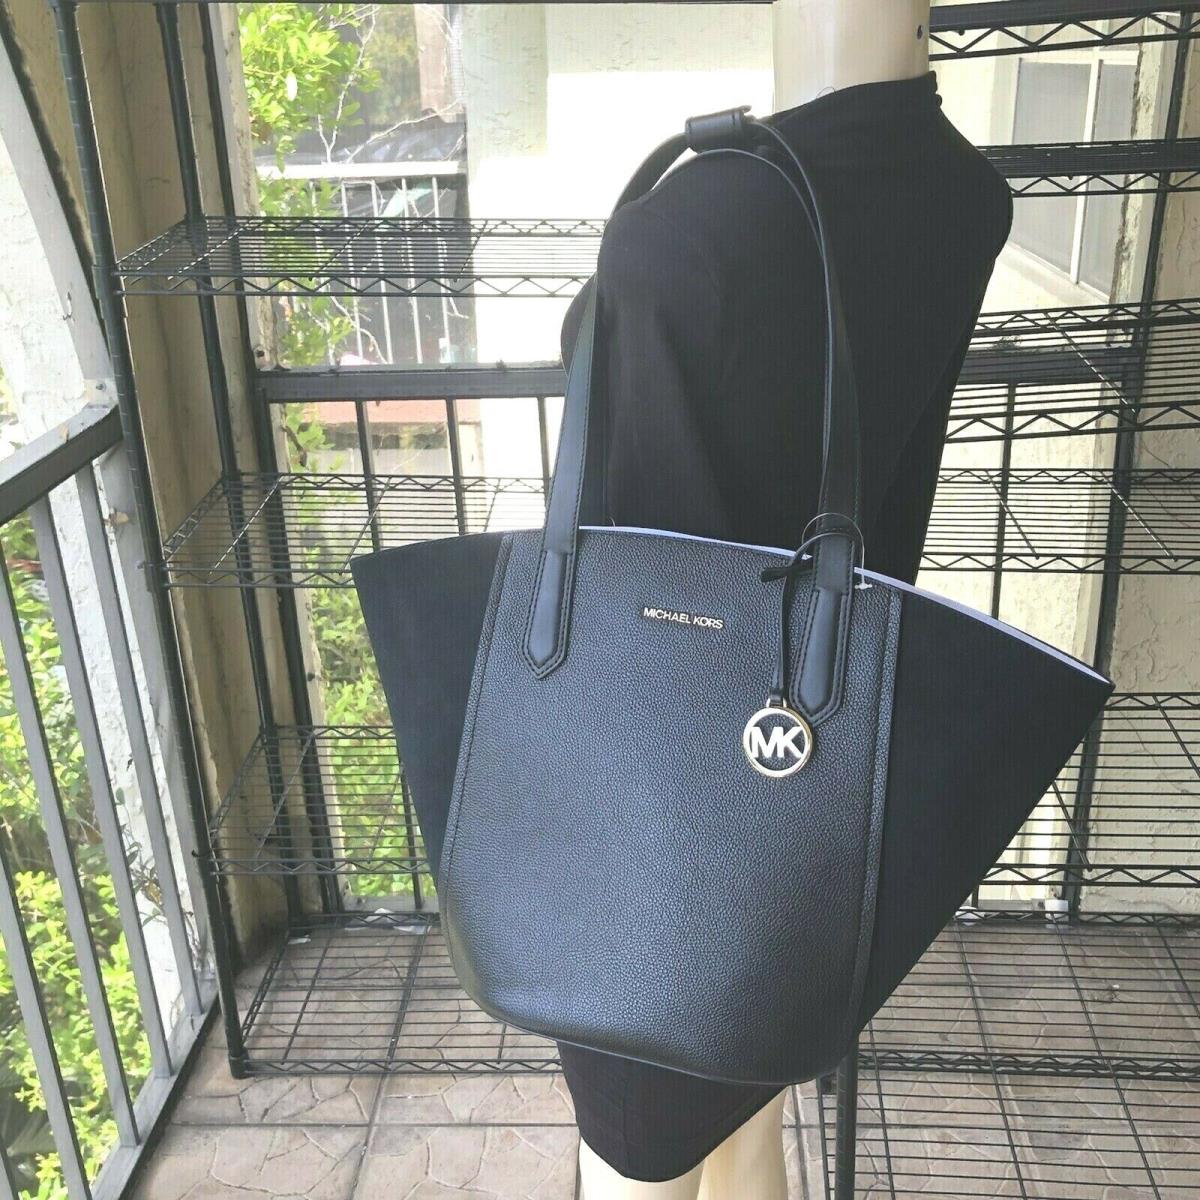 MK michael kors purse bag handbag BLACK $398 | eBay